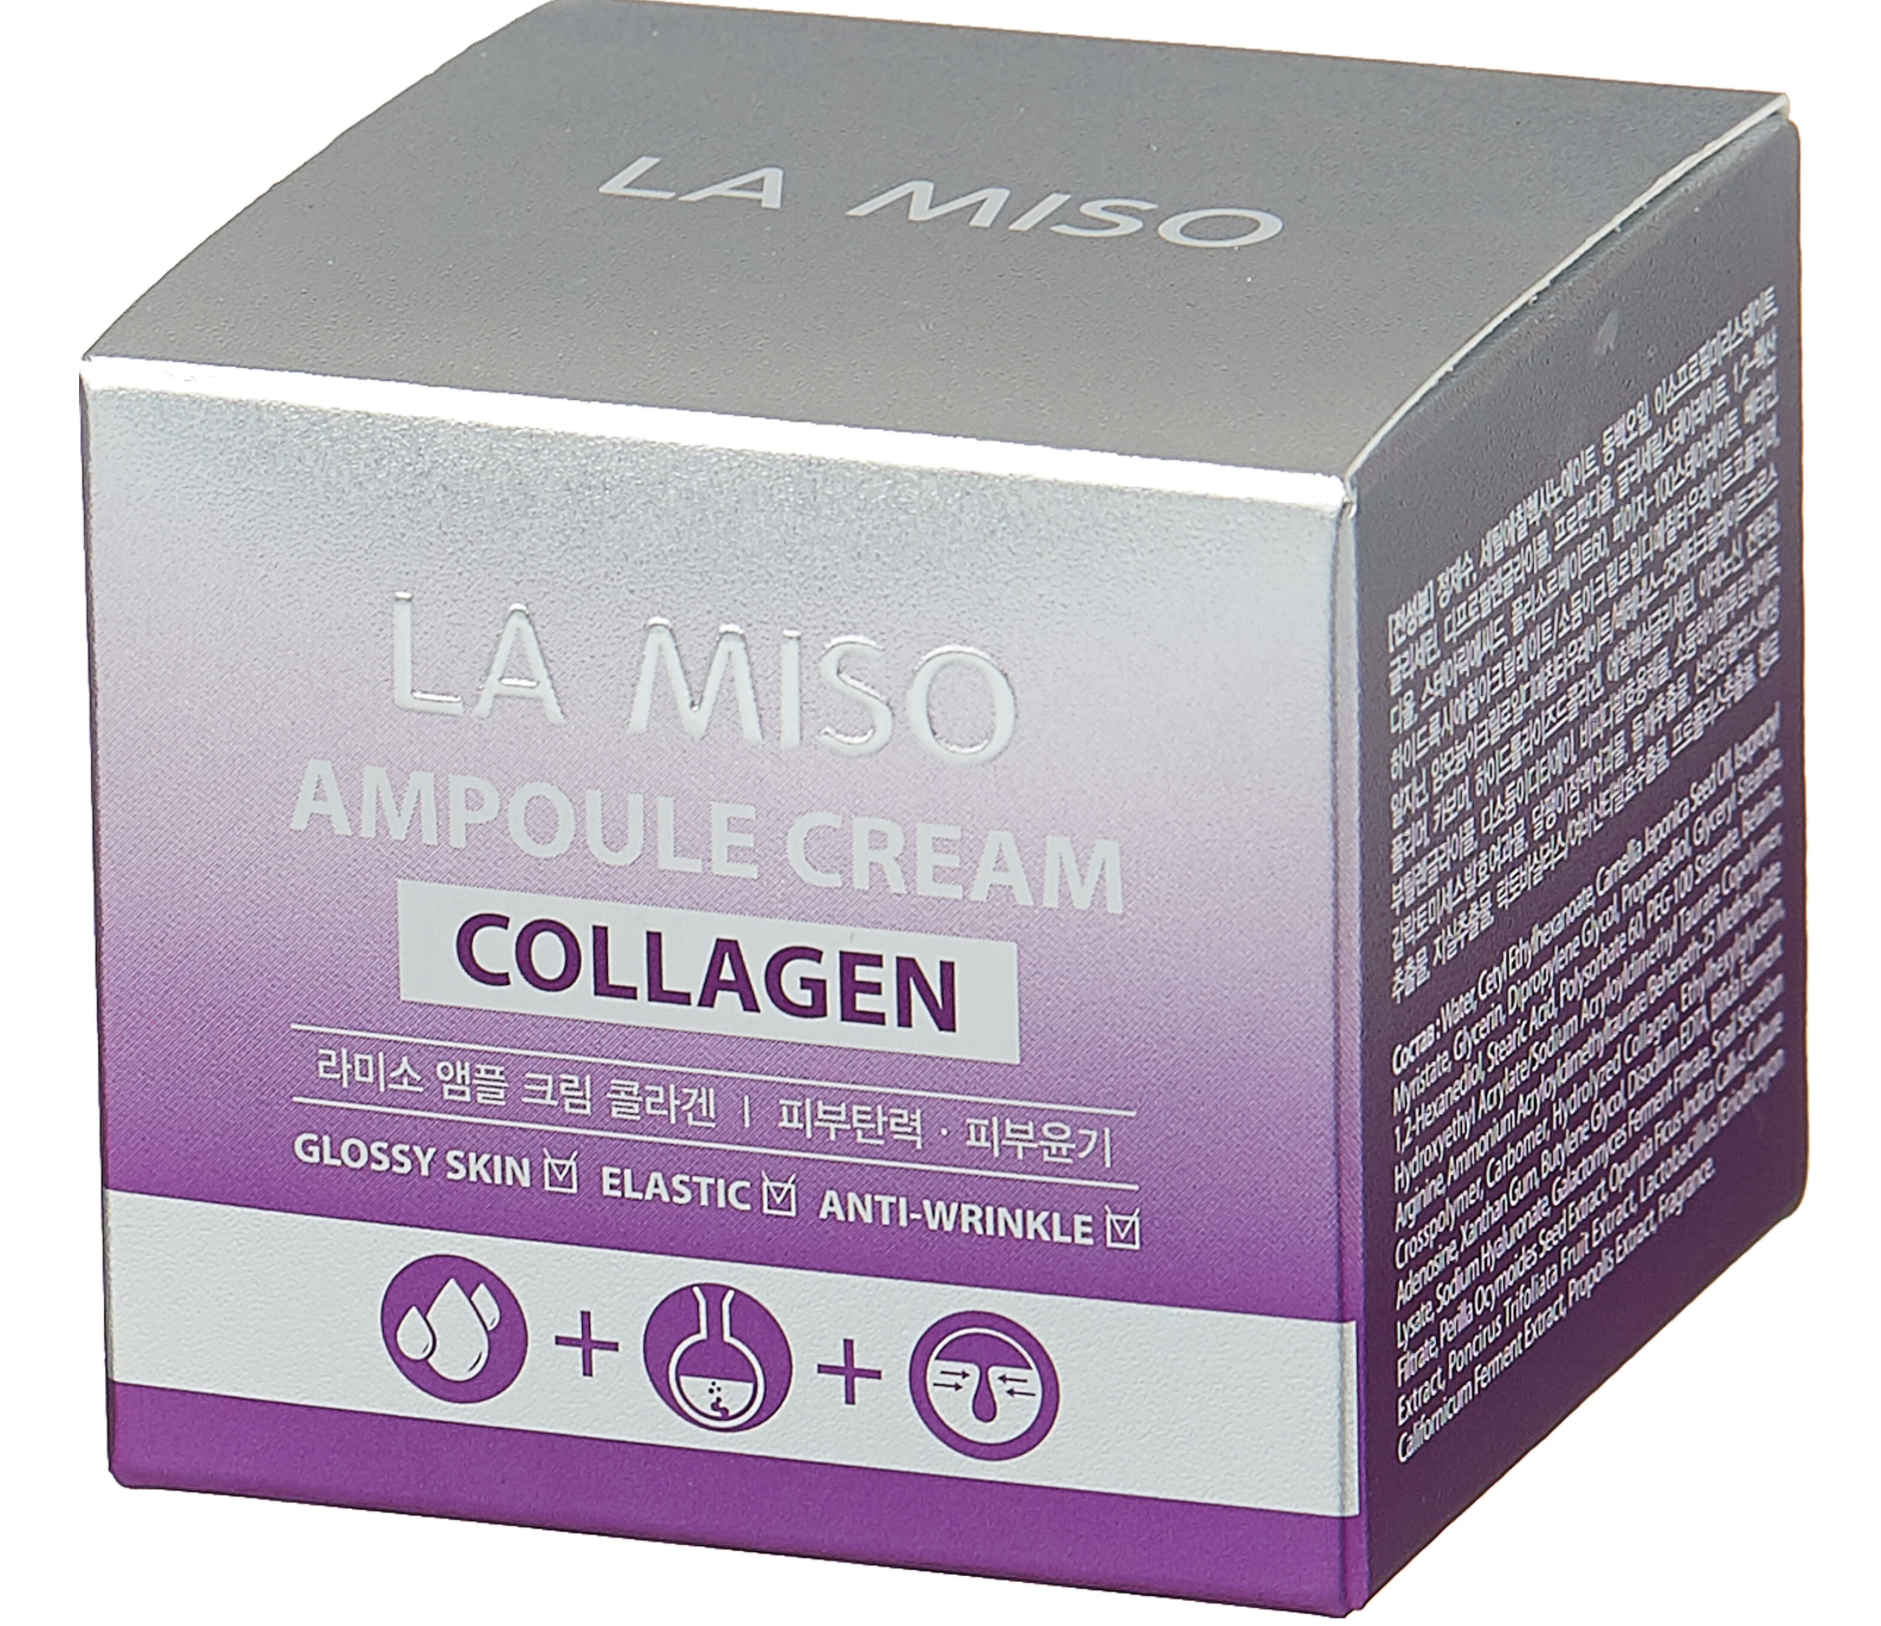    / La Miso -      Ampoule Cream Collagen 50 